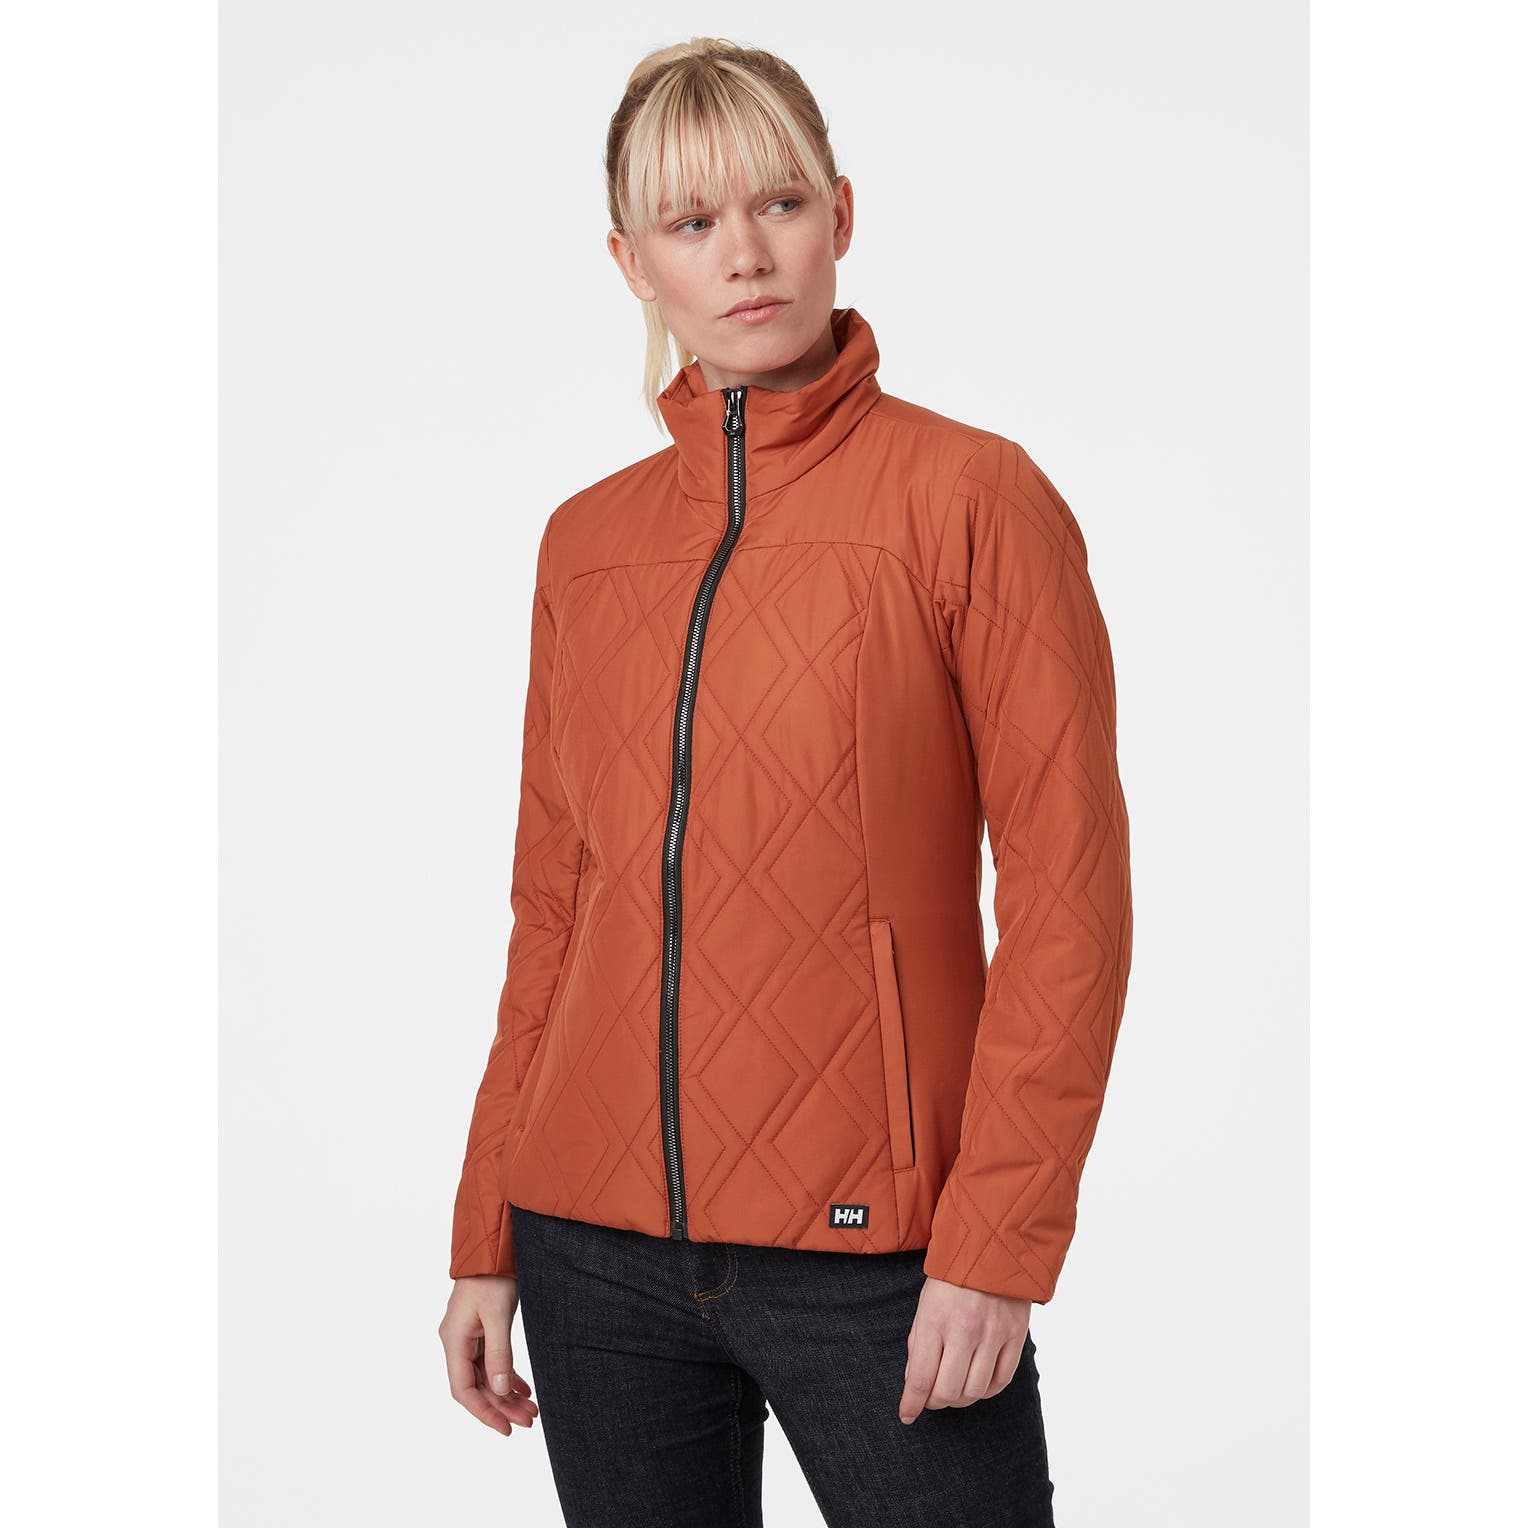 Helly Hansen Crew Insulator Jacket - Synthetic jacket - Women's